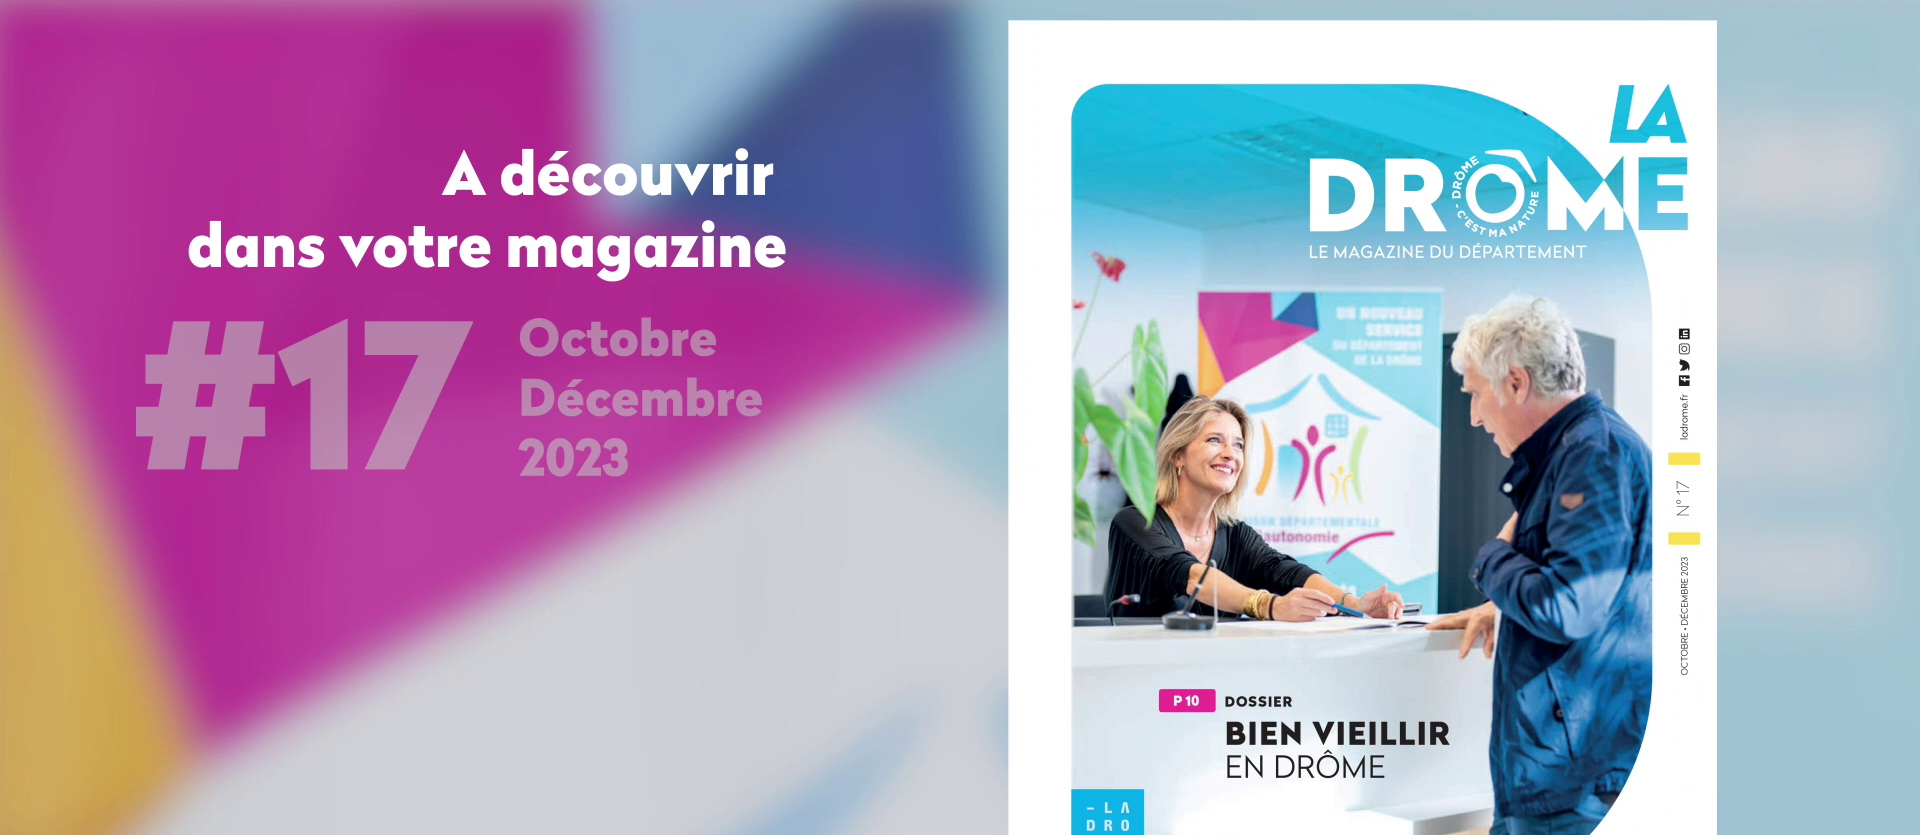 Le magazine de la Drôme n°17 est sorti !